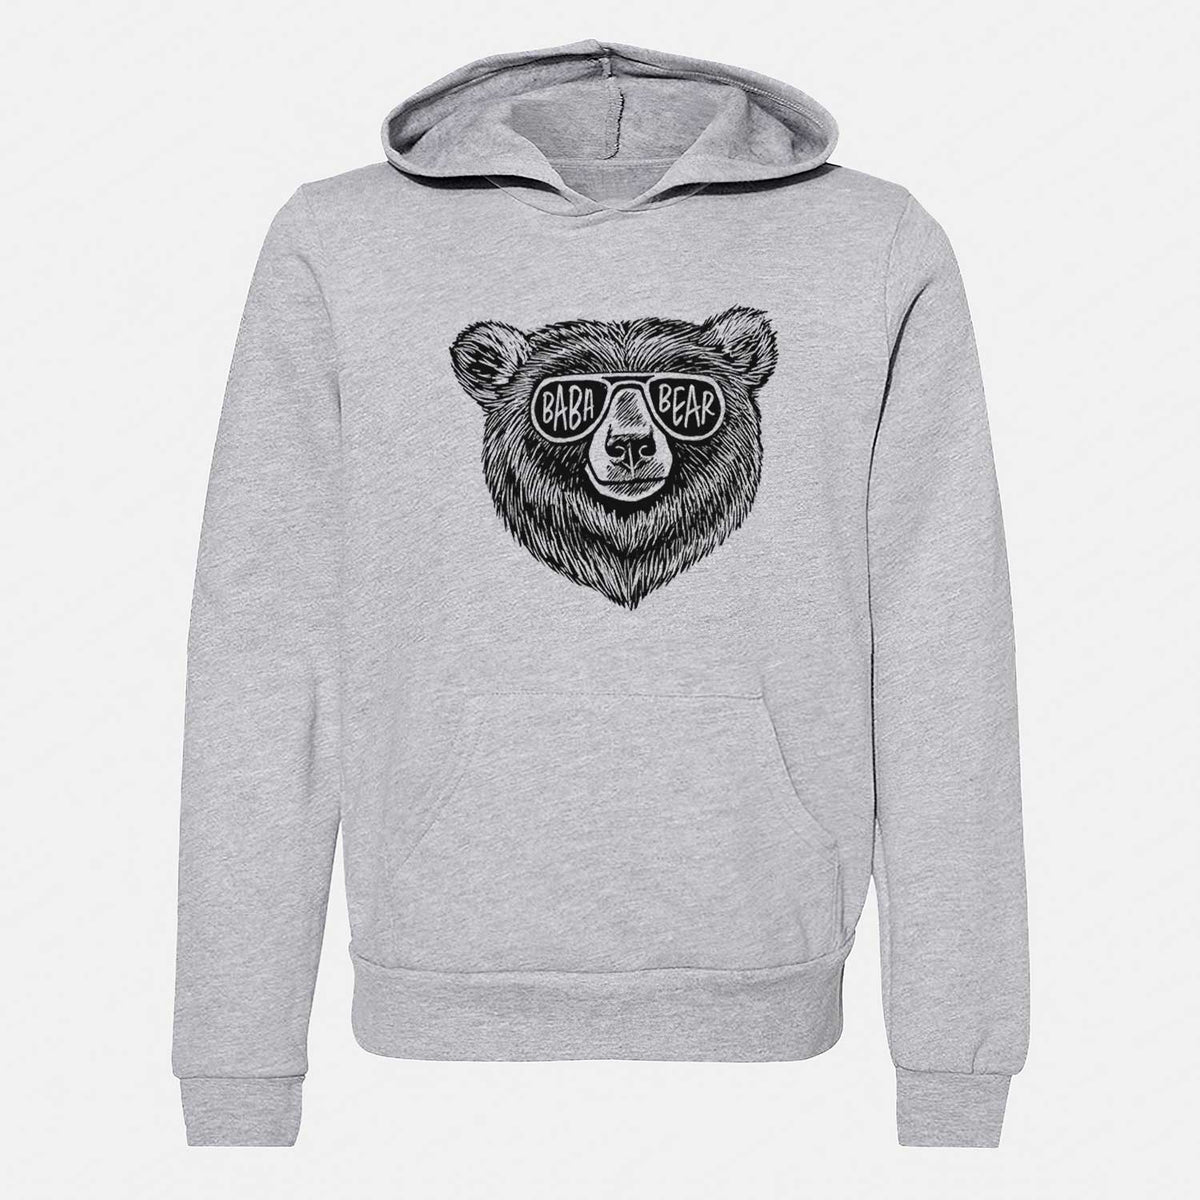 Baba Bear - Youth Hoodie Sweatshirt